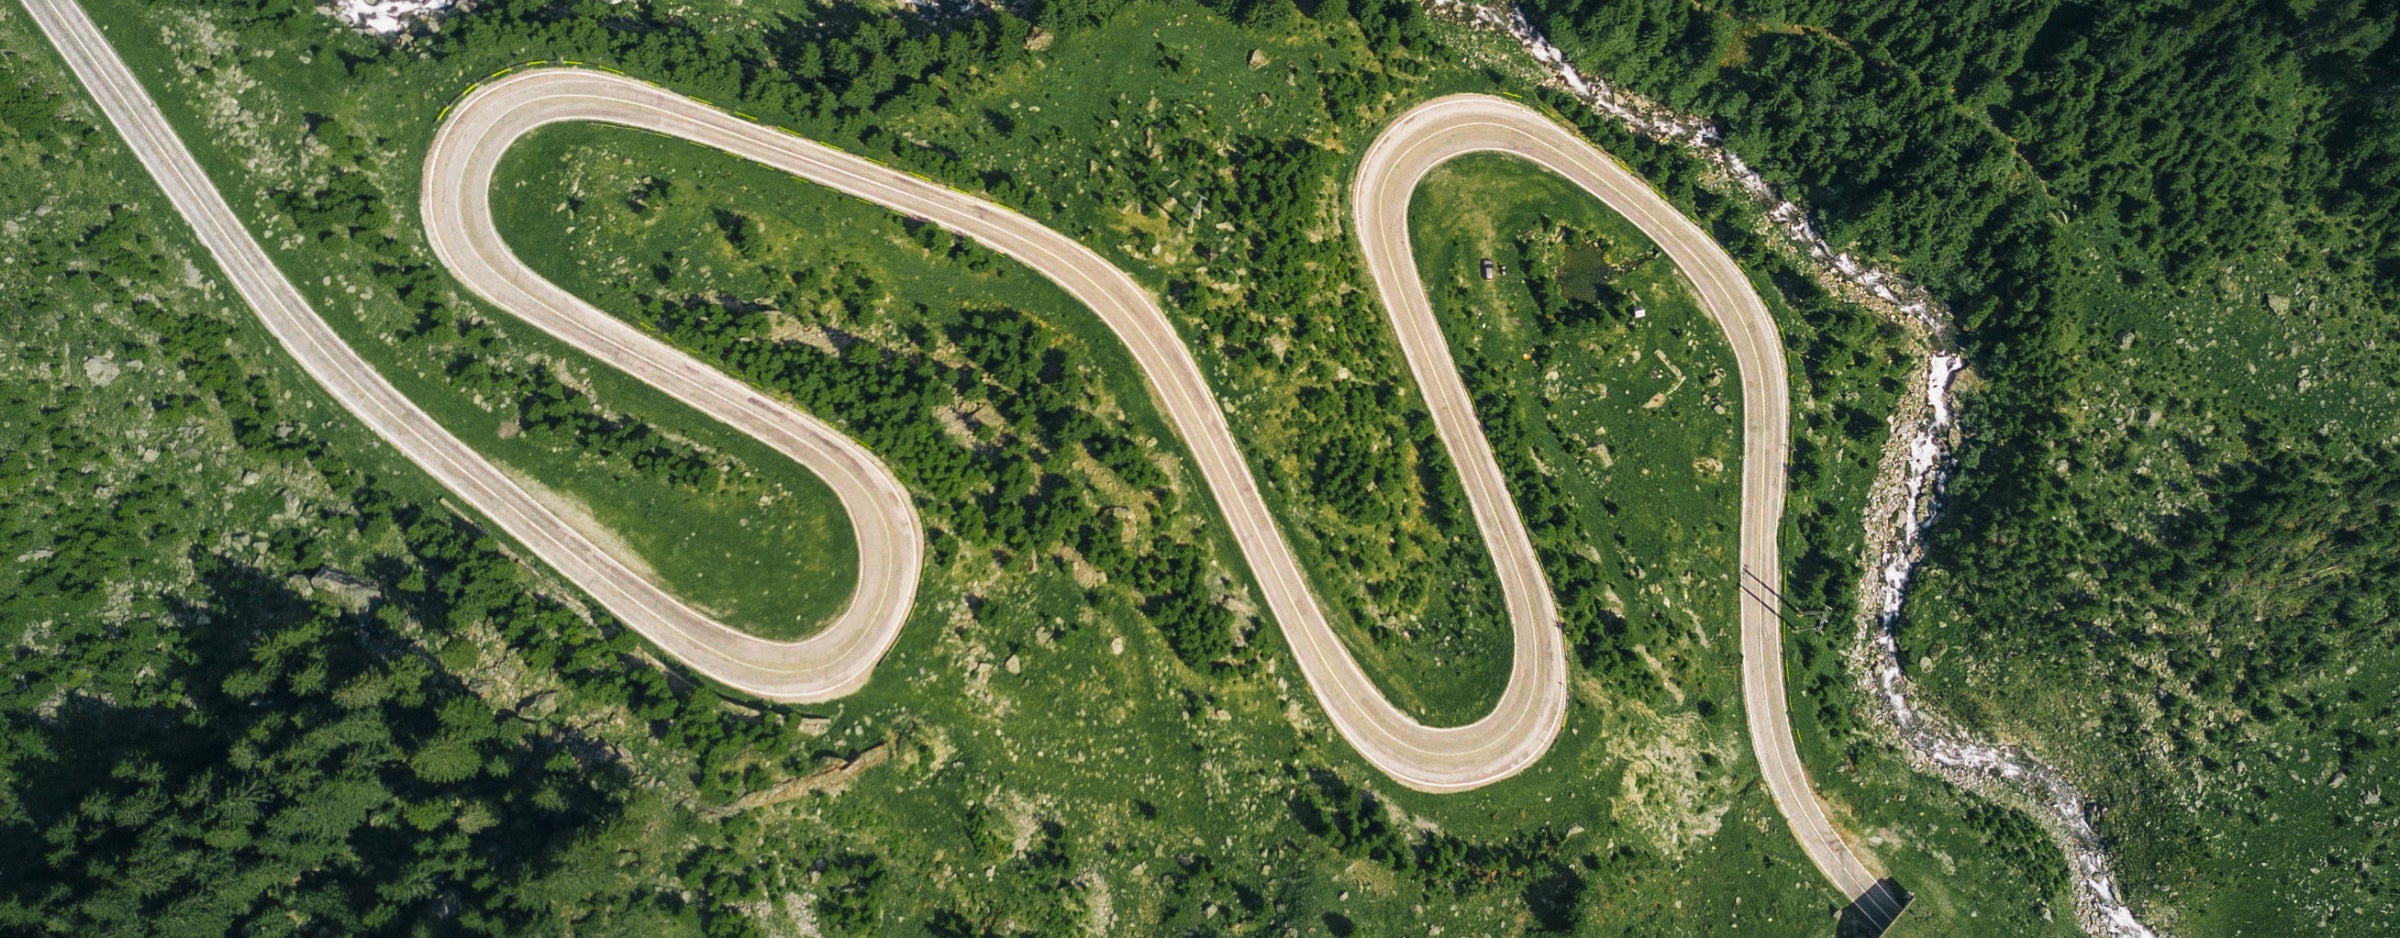 mountain roads in austria